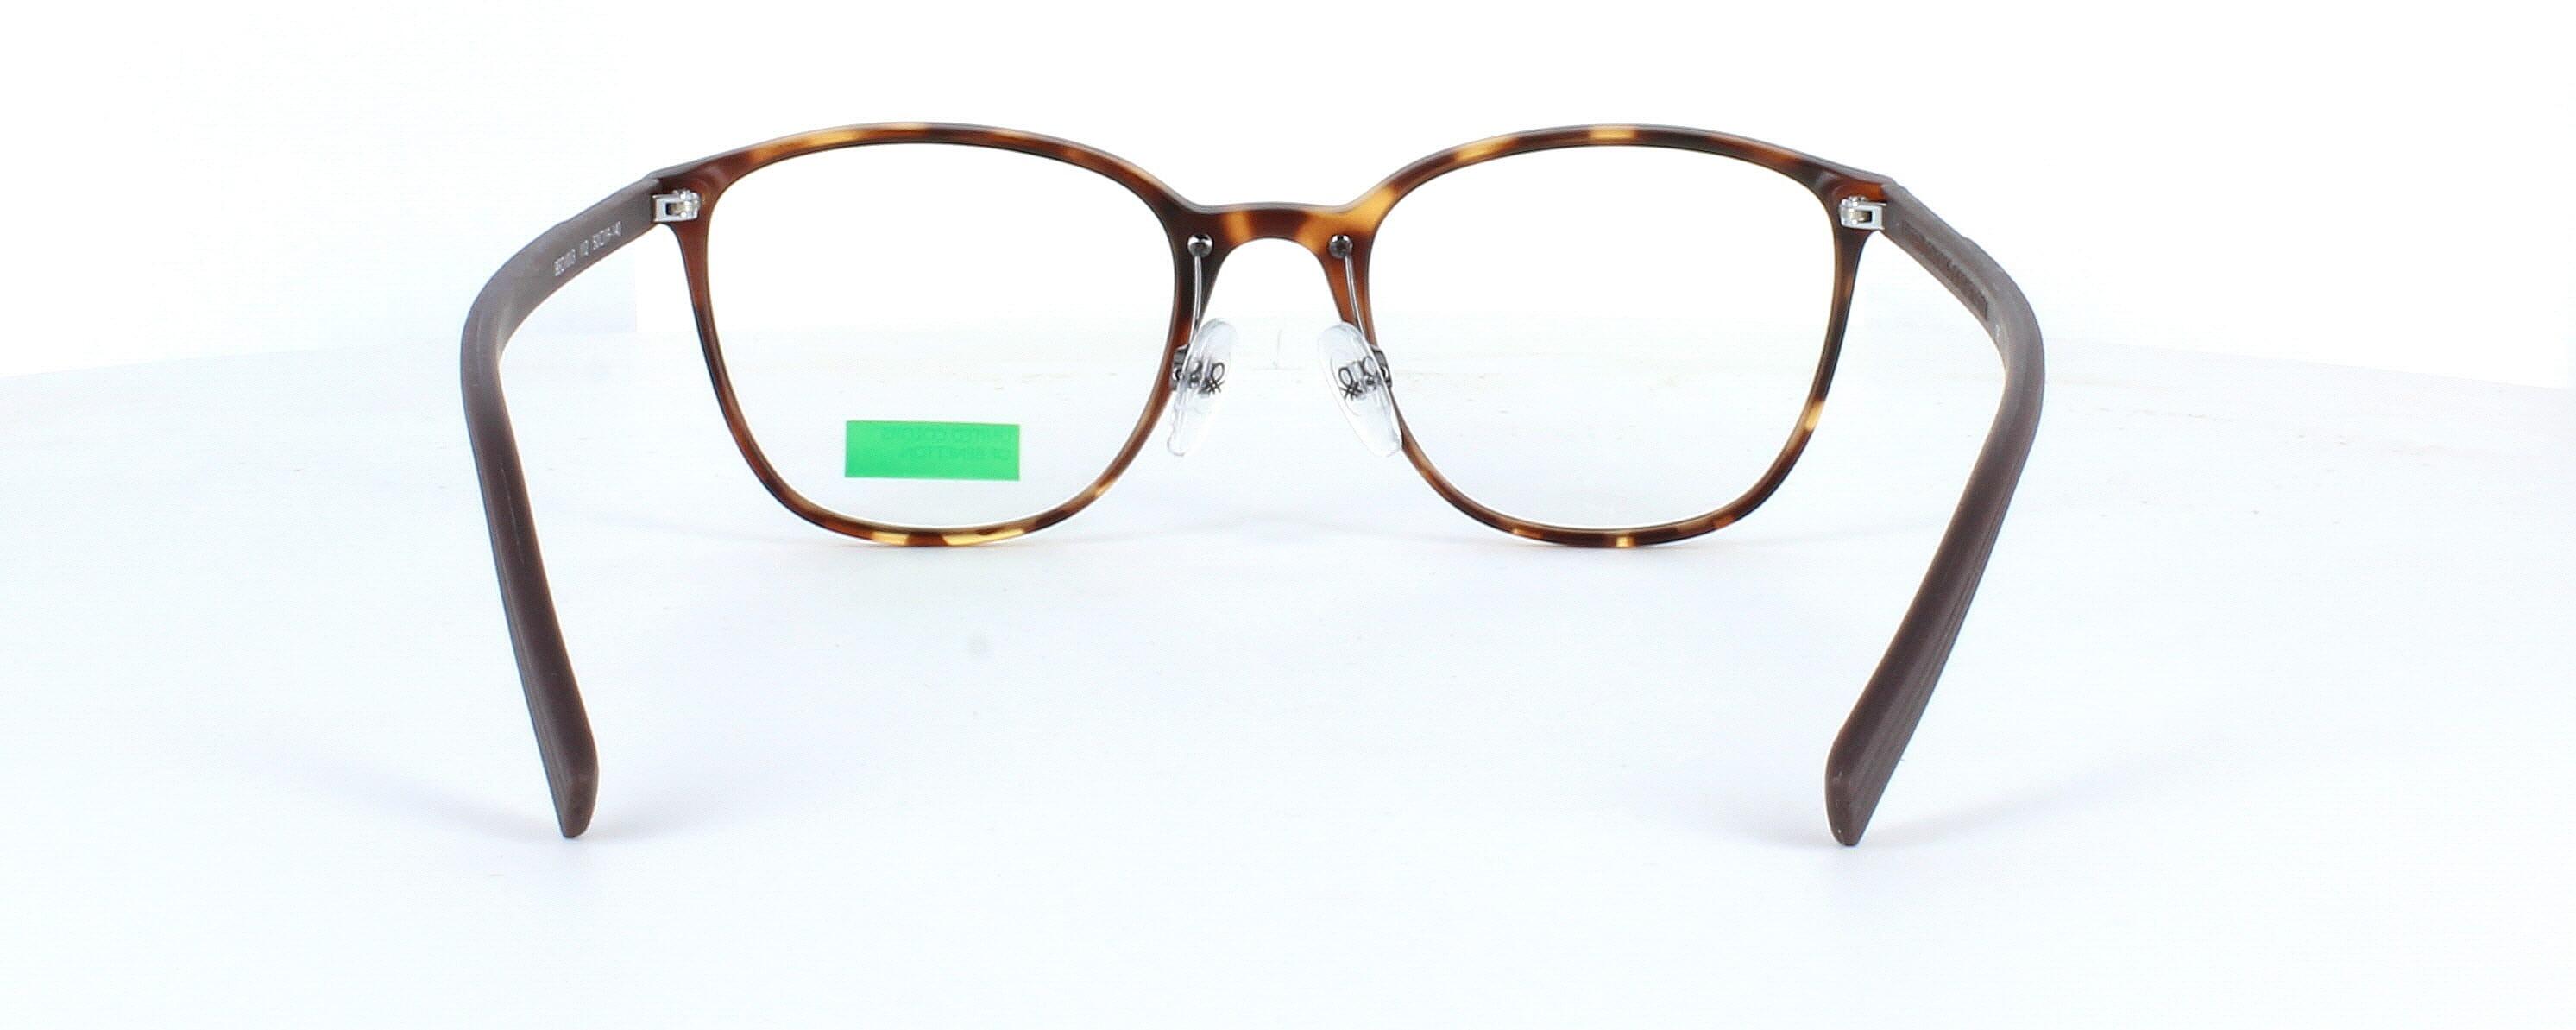 Benetton BEO1012 921 - Ladies matt tortoise round shaped TR90 lightweight glasses - image view 4